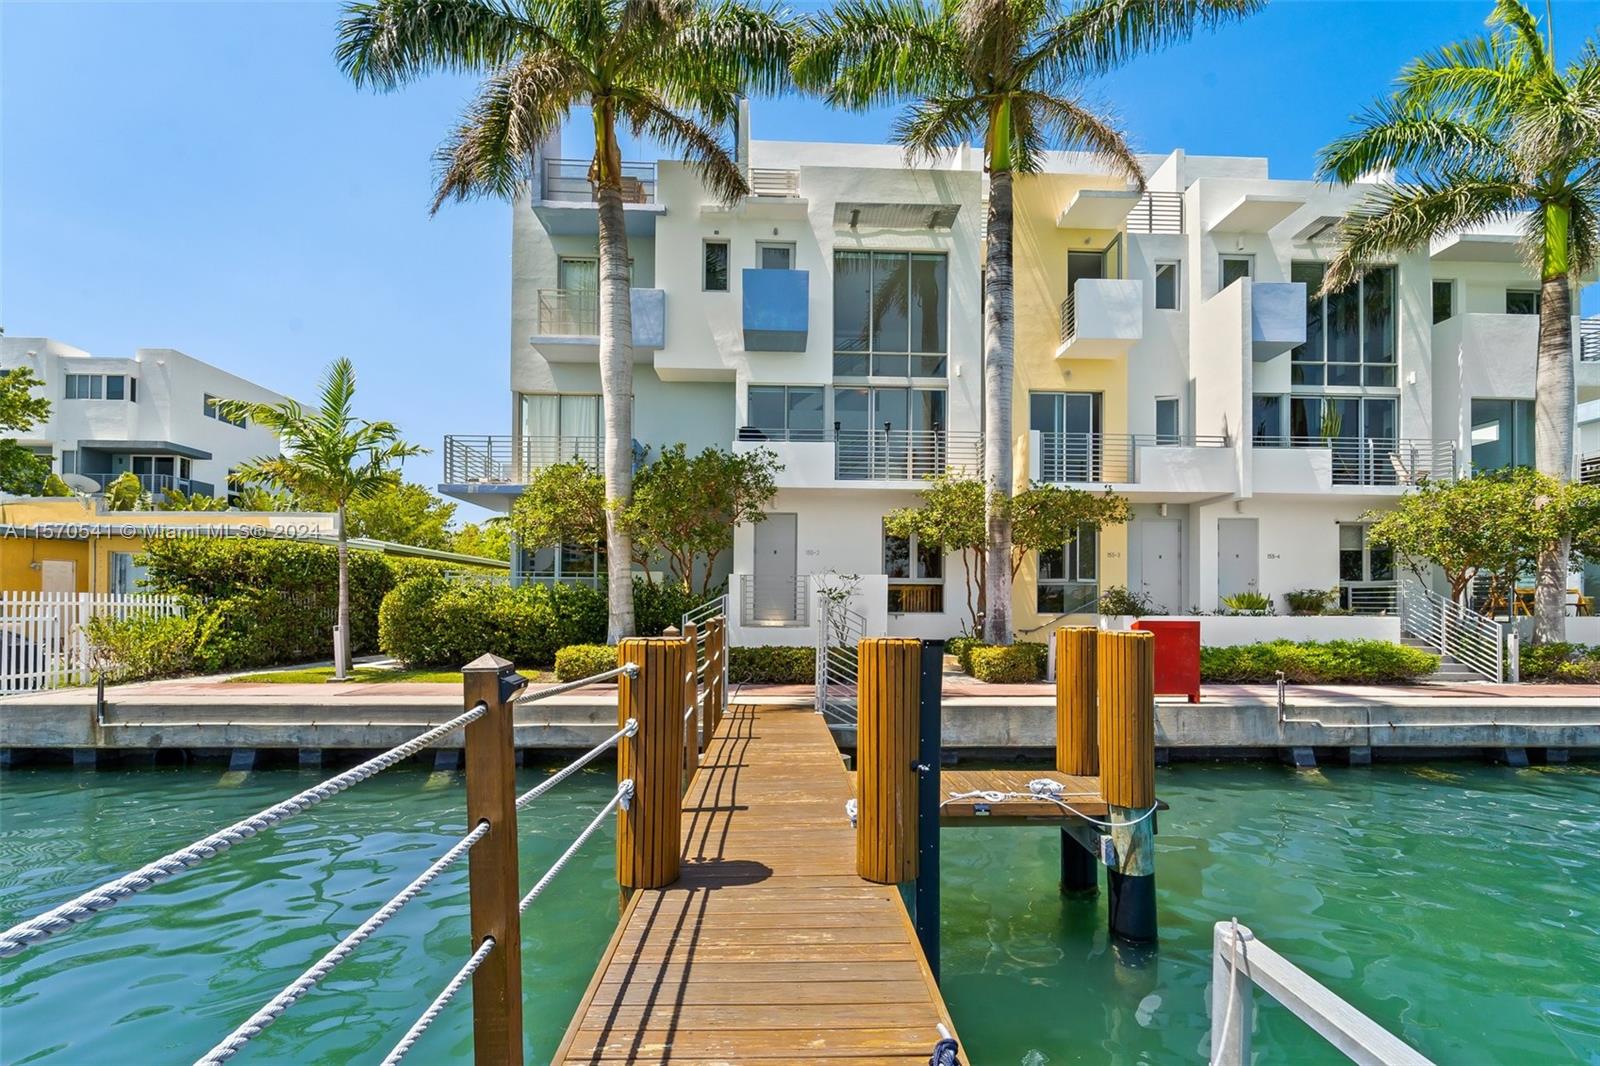 Property for Sale at 155 N Shore Dr 2, Miami Beach, Miami-Dade County, Florida - Bedrooms: 3 
Bathrooms: 4  - $1,950,000